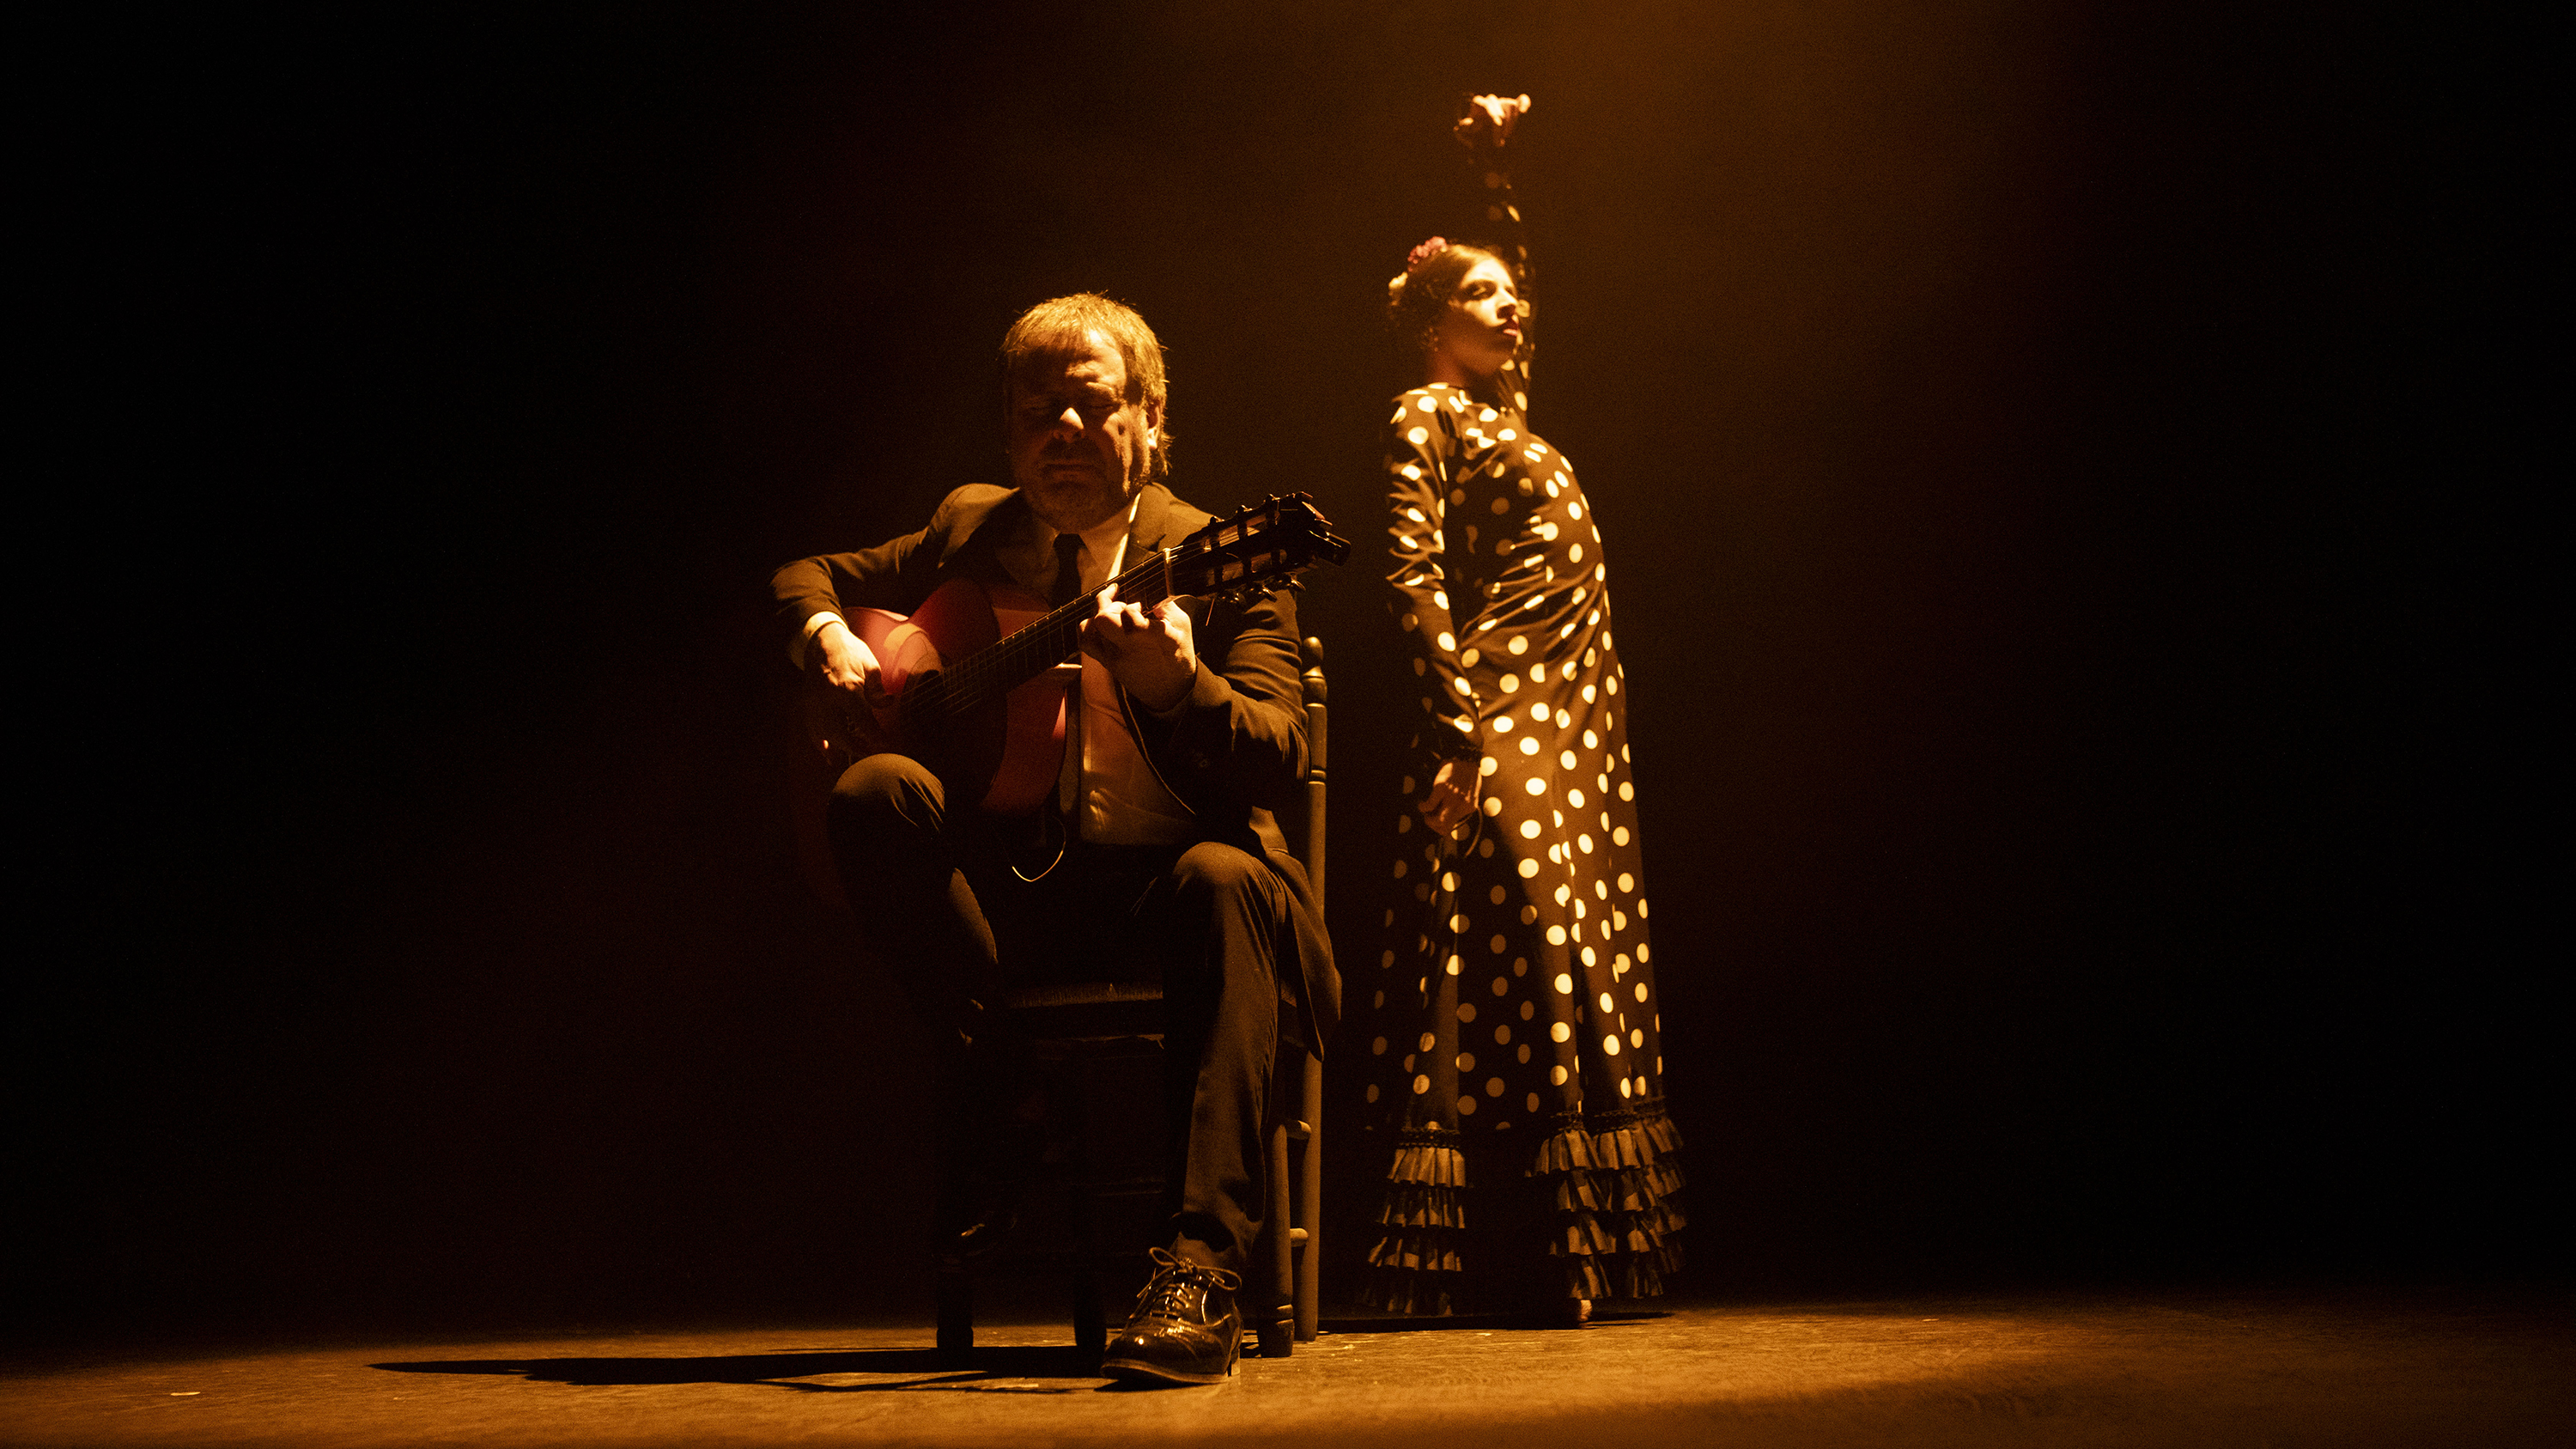 Master classical guitarist Antonio Andrade performs at Teatro Flamenco Sevilla in Seville, Spain. Copyright / Credit: Sean Biffar.